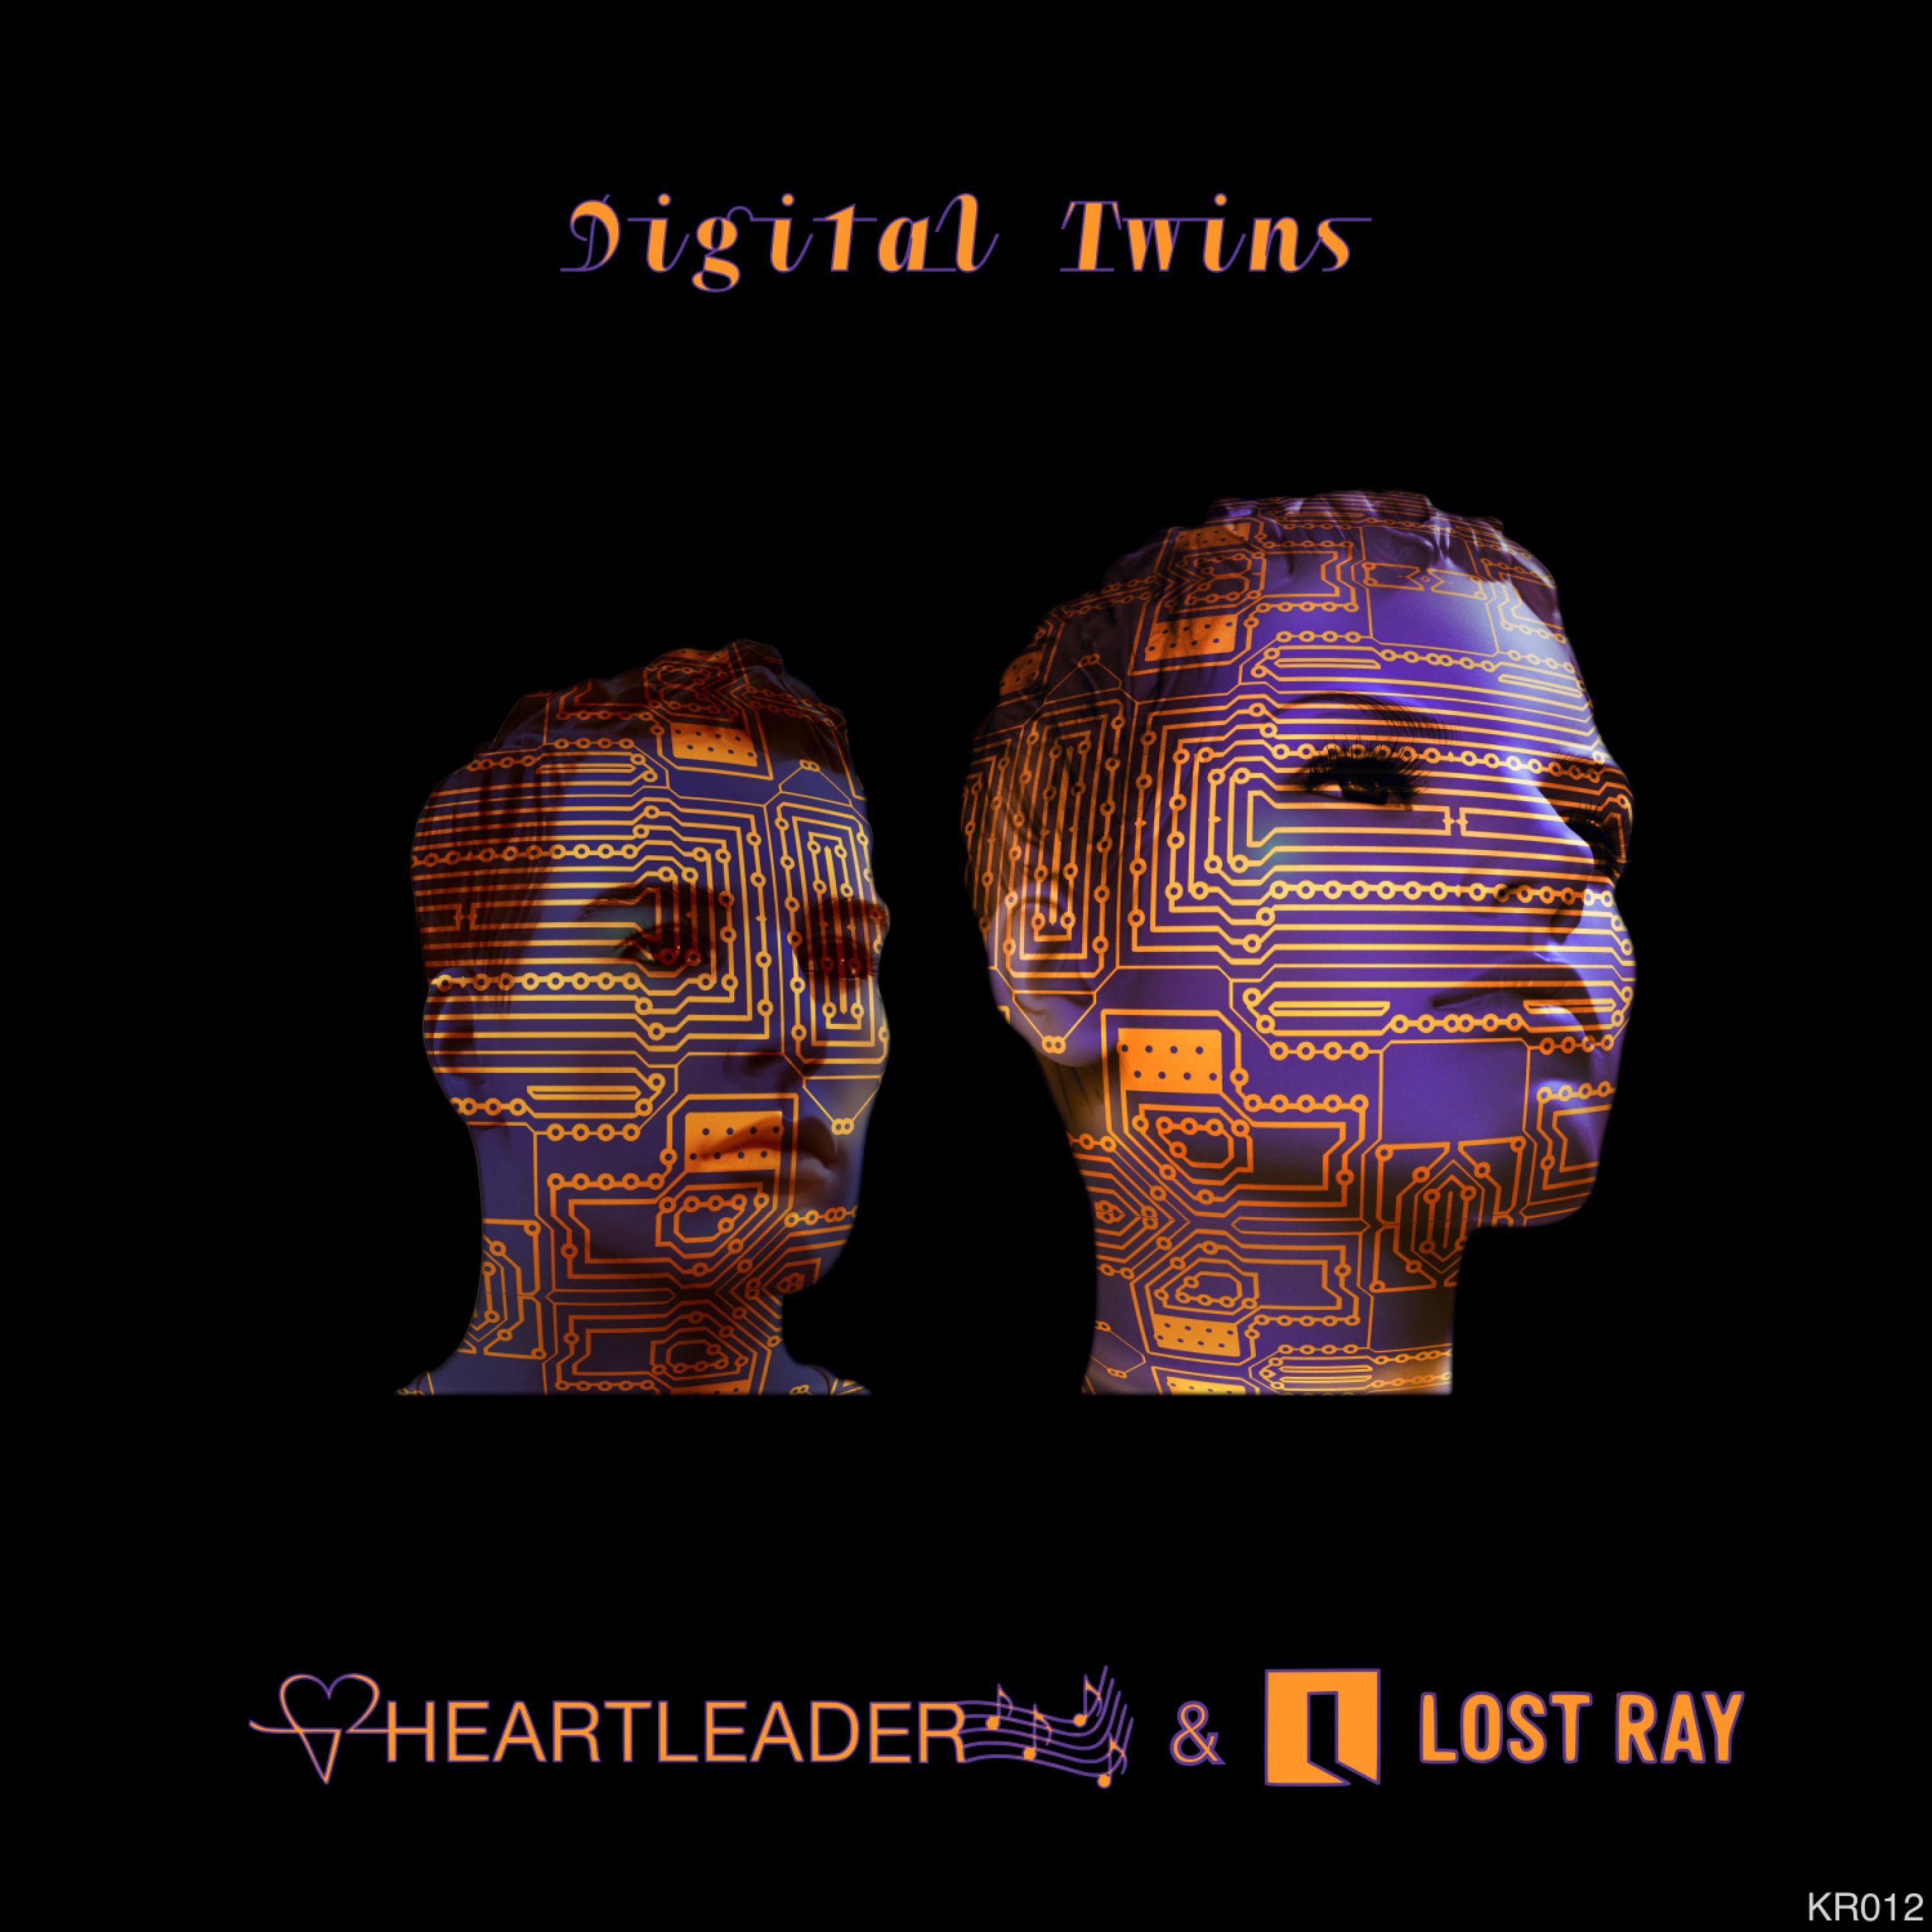 Heartleader - Digital Twins